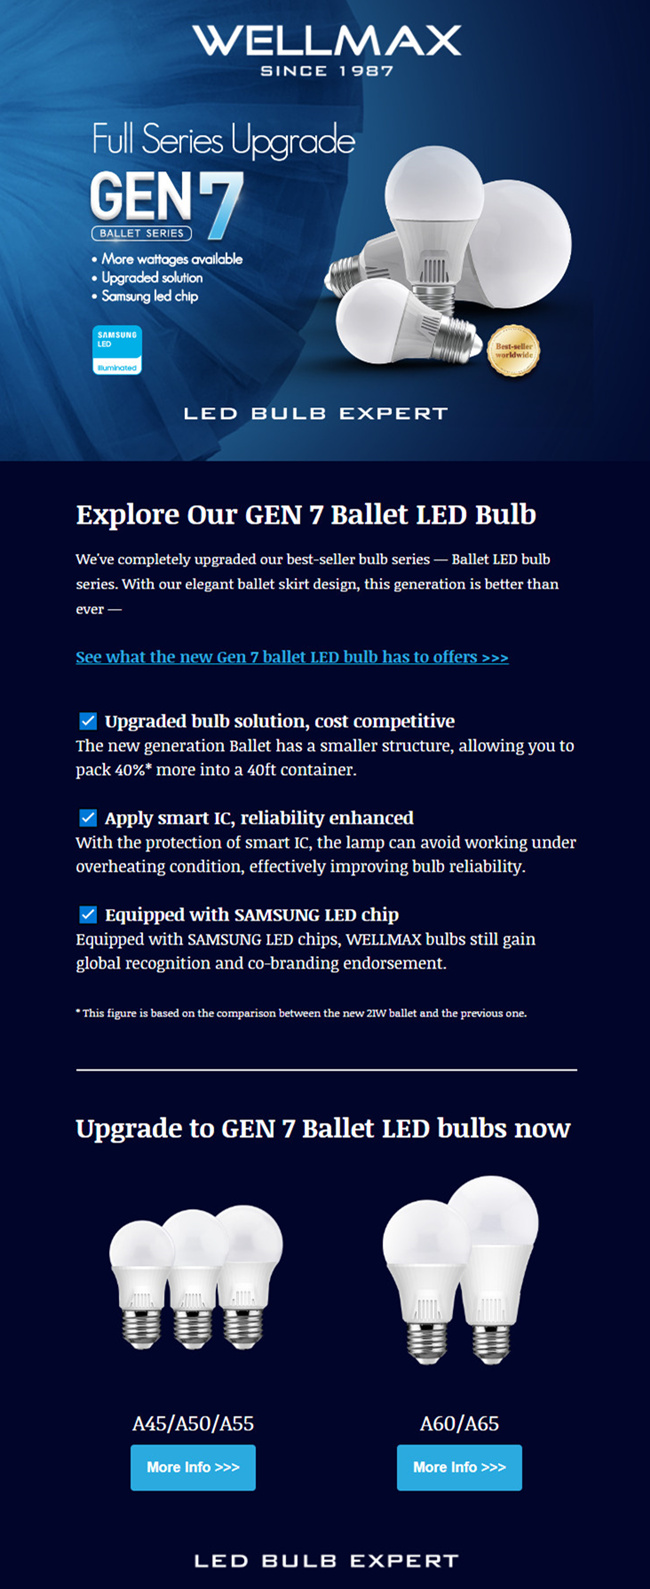 GEN 7 Ballet LED Bulbs